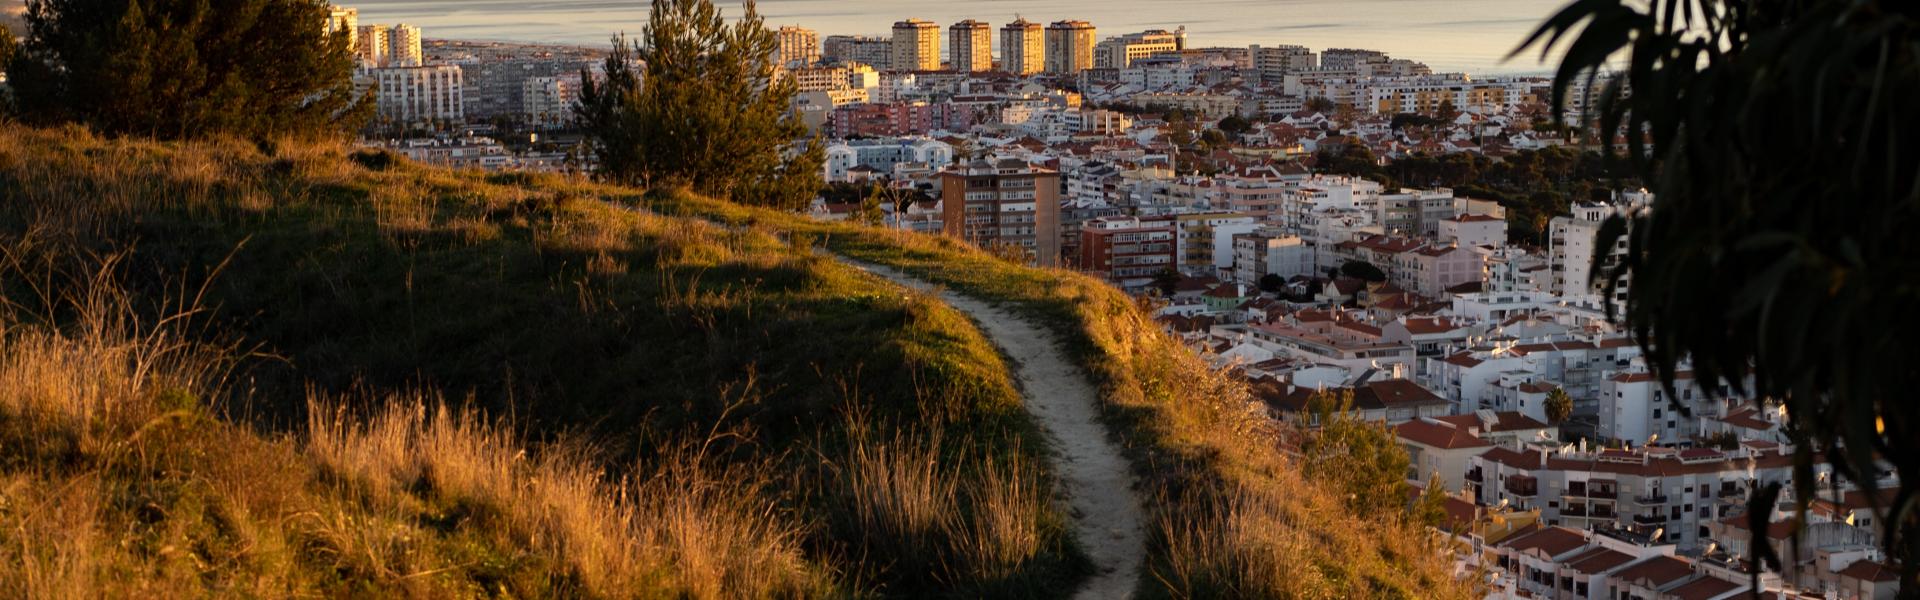 Find the perfect vacation home on the Costa de Lisboa - Casamundo